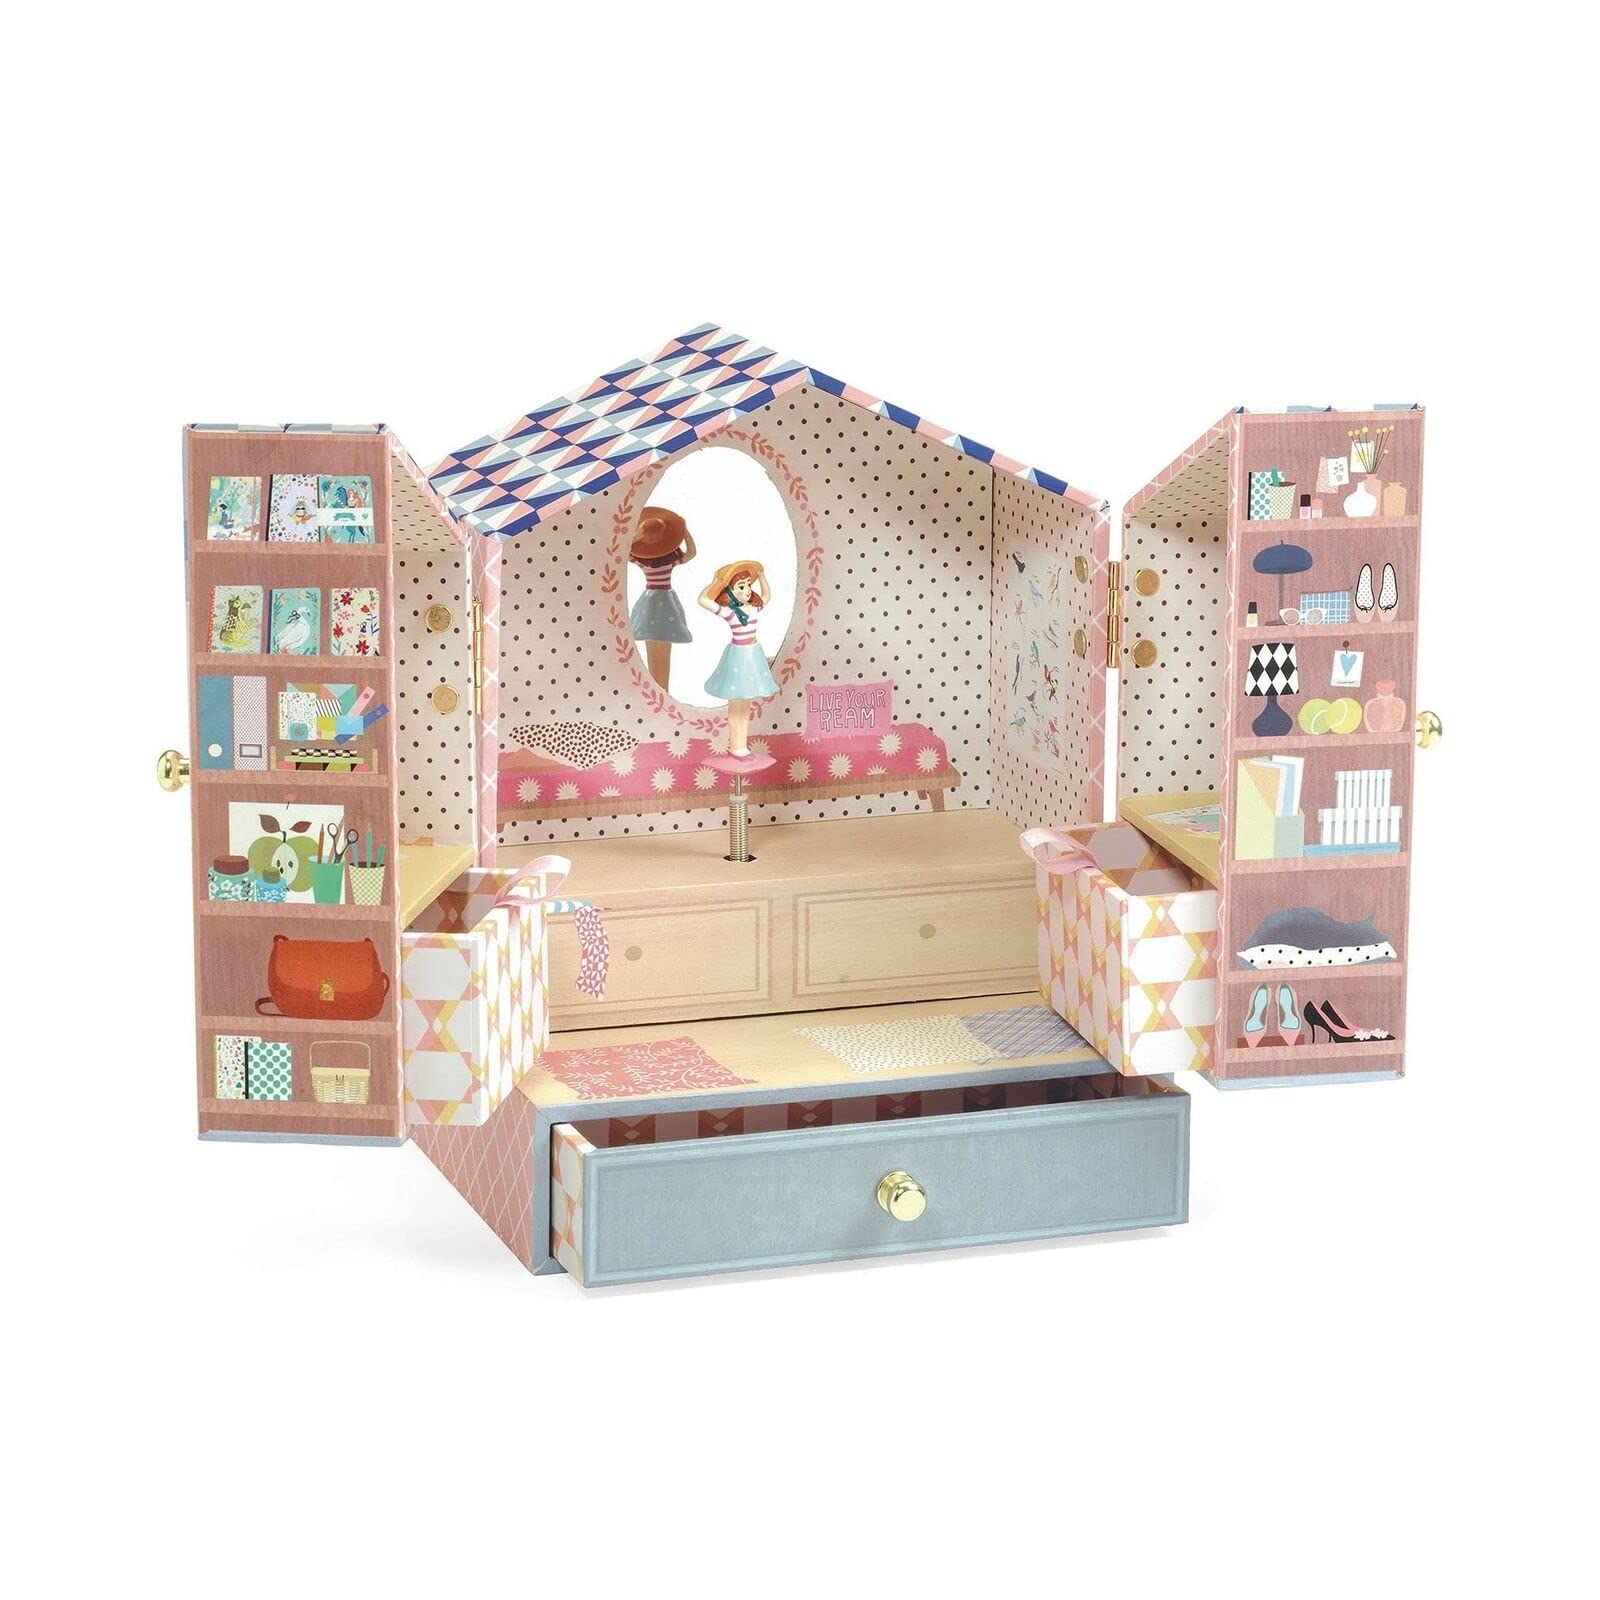 DJECO Tinou Shop Musical Treasure Box, Multicoloured